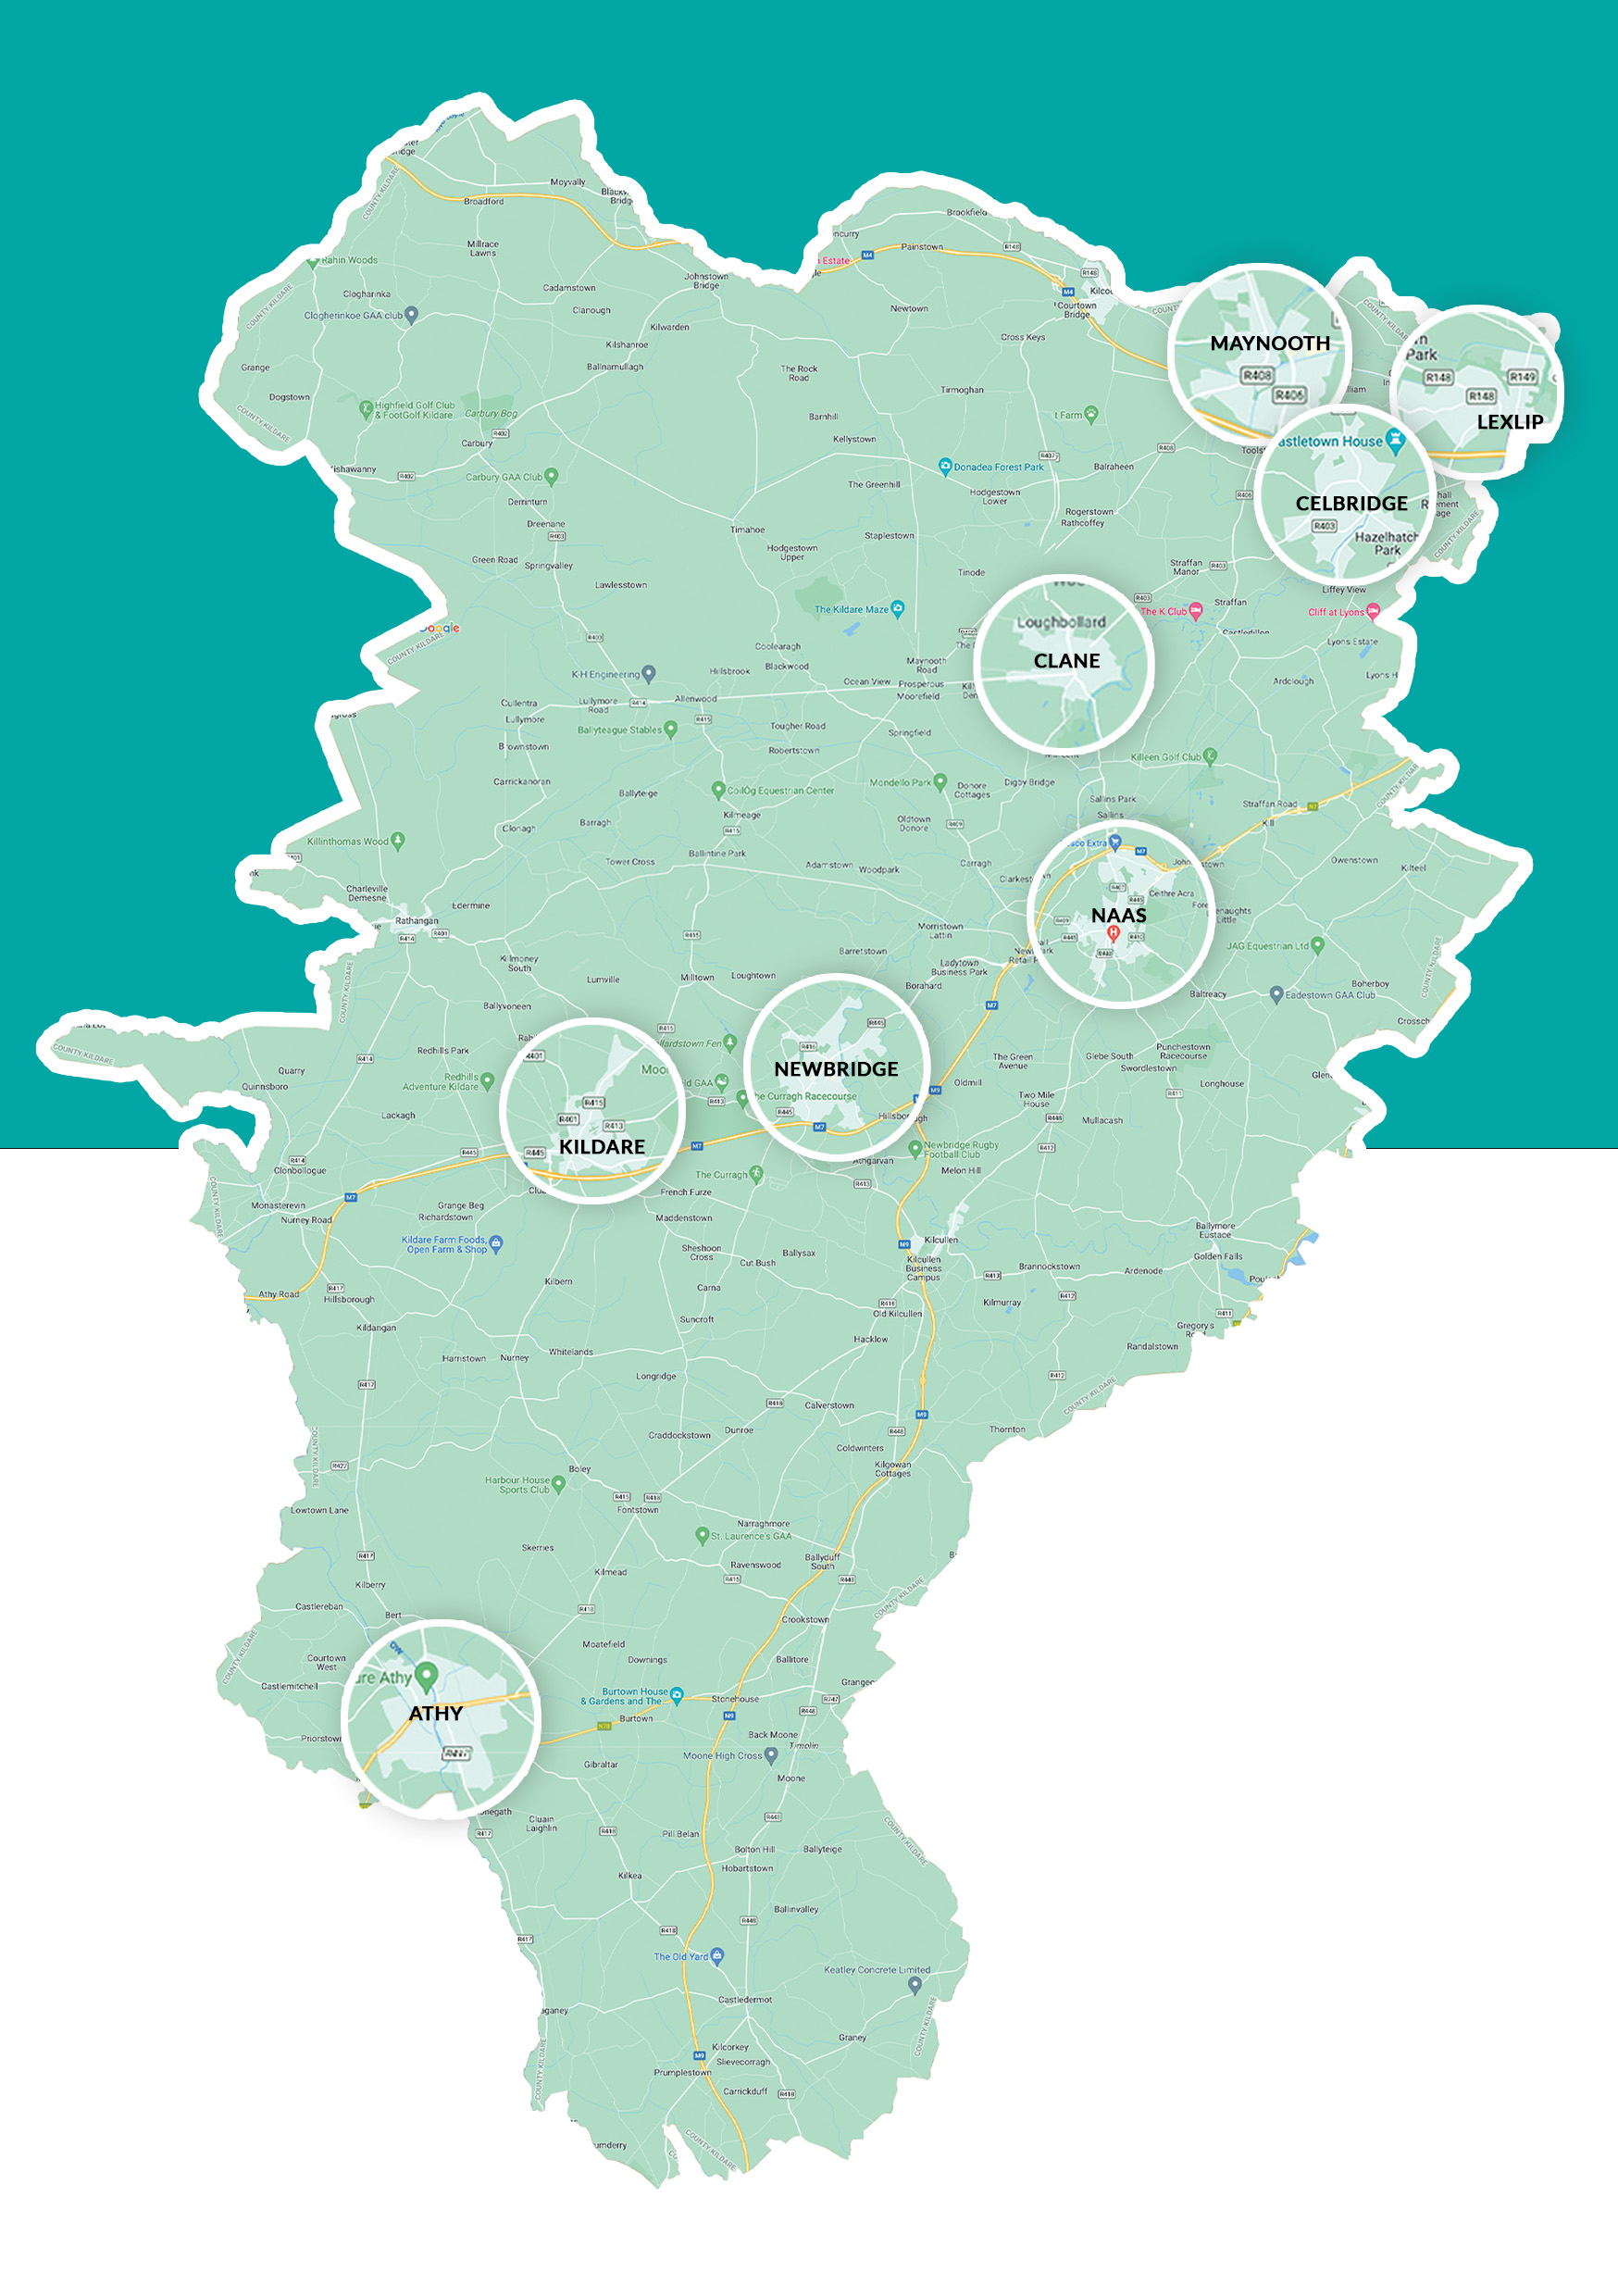 Kildare leaflet distribution areas